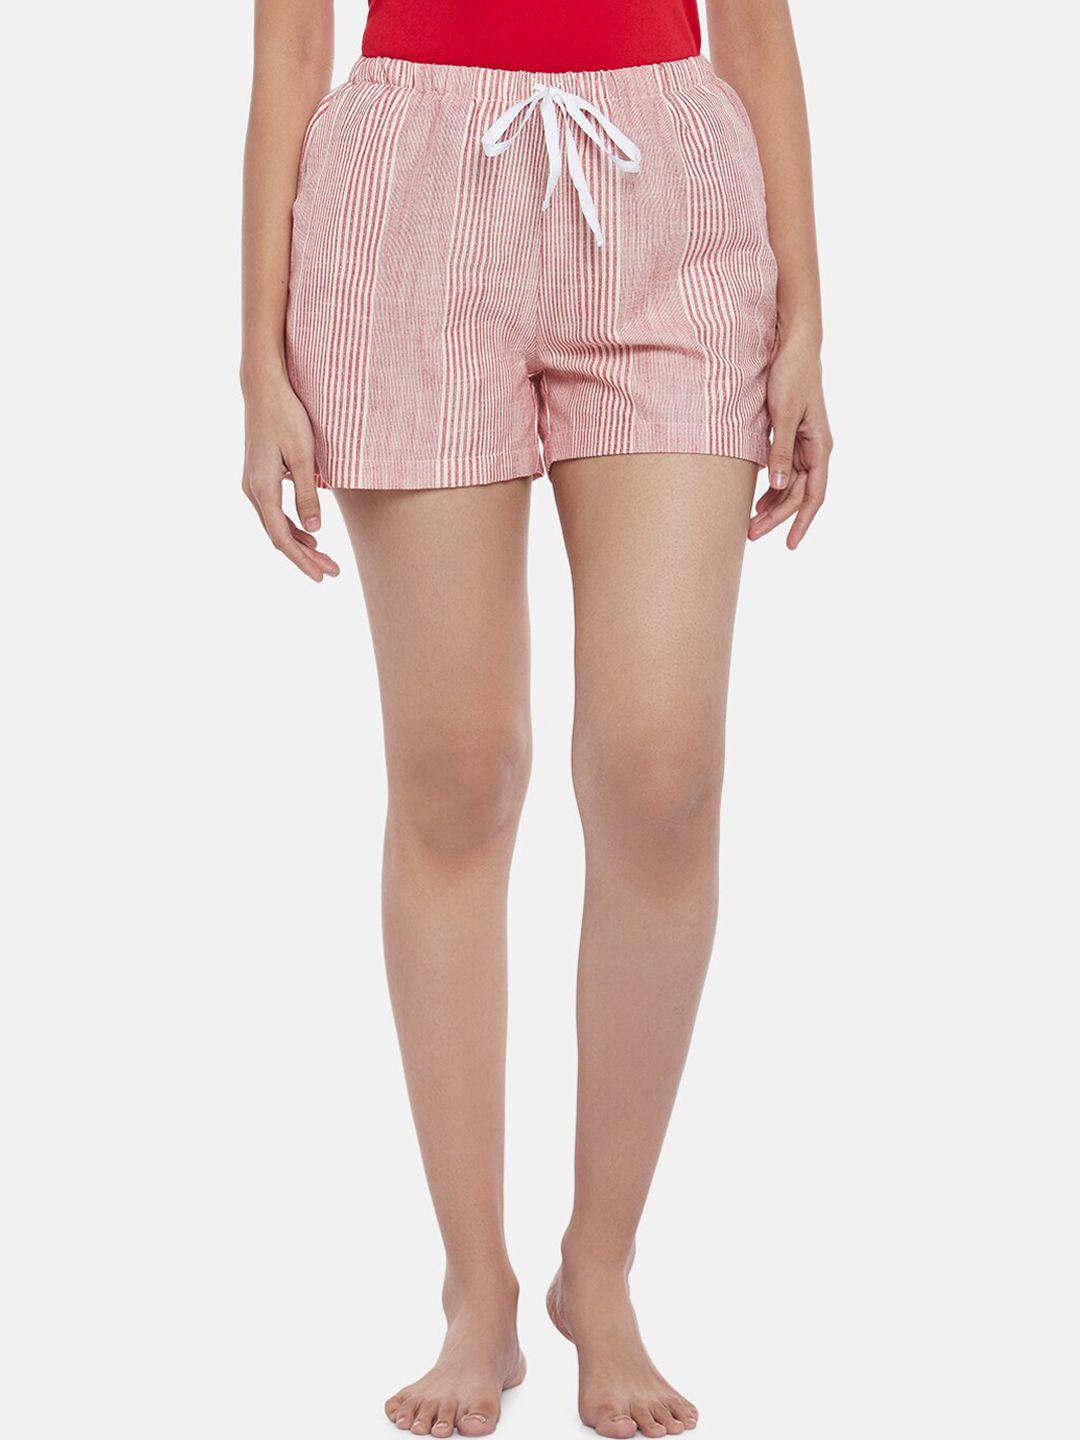 dreamz by pantaloons women red striped lounge shorts